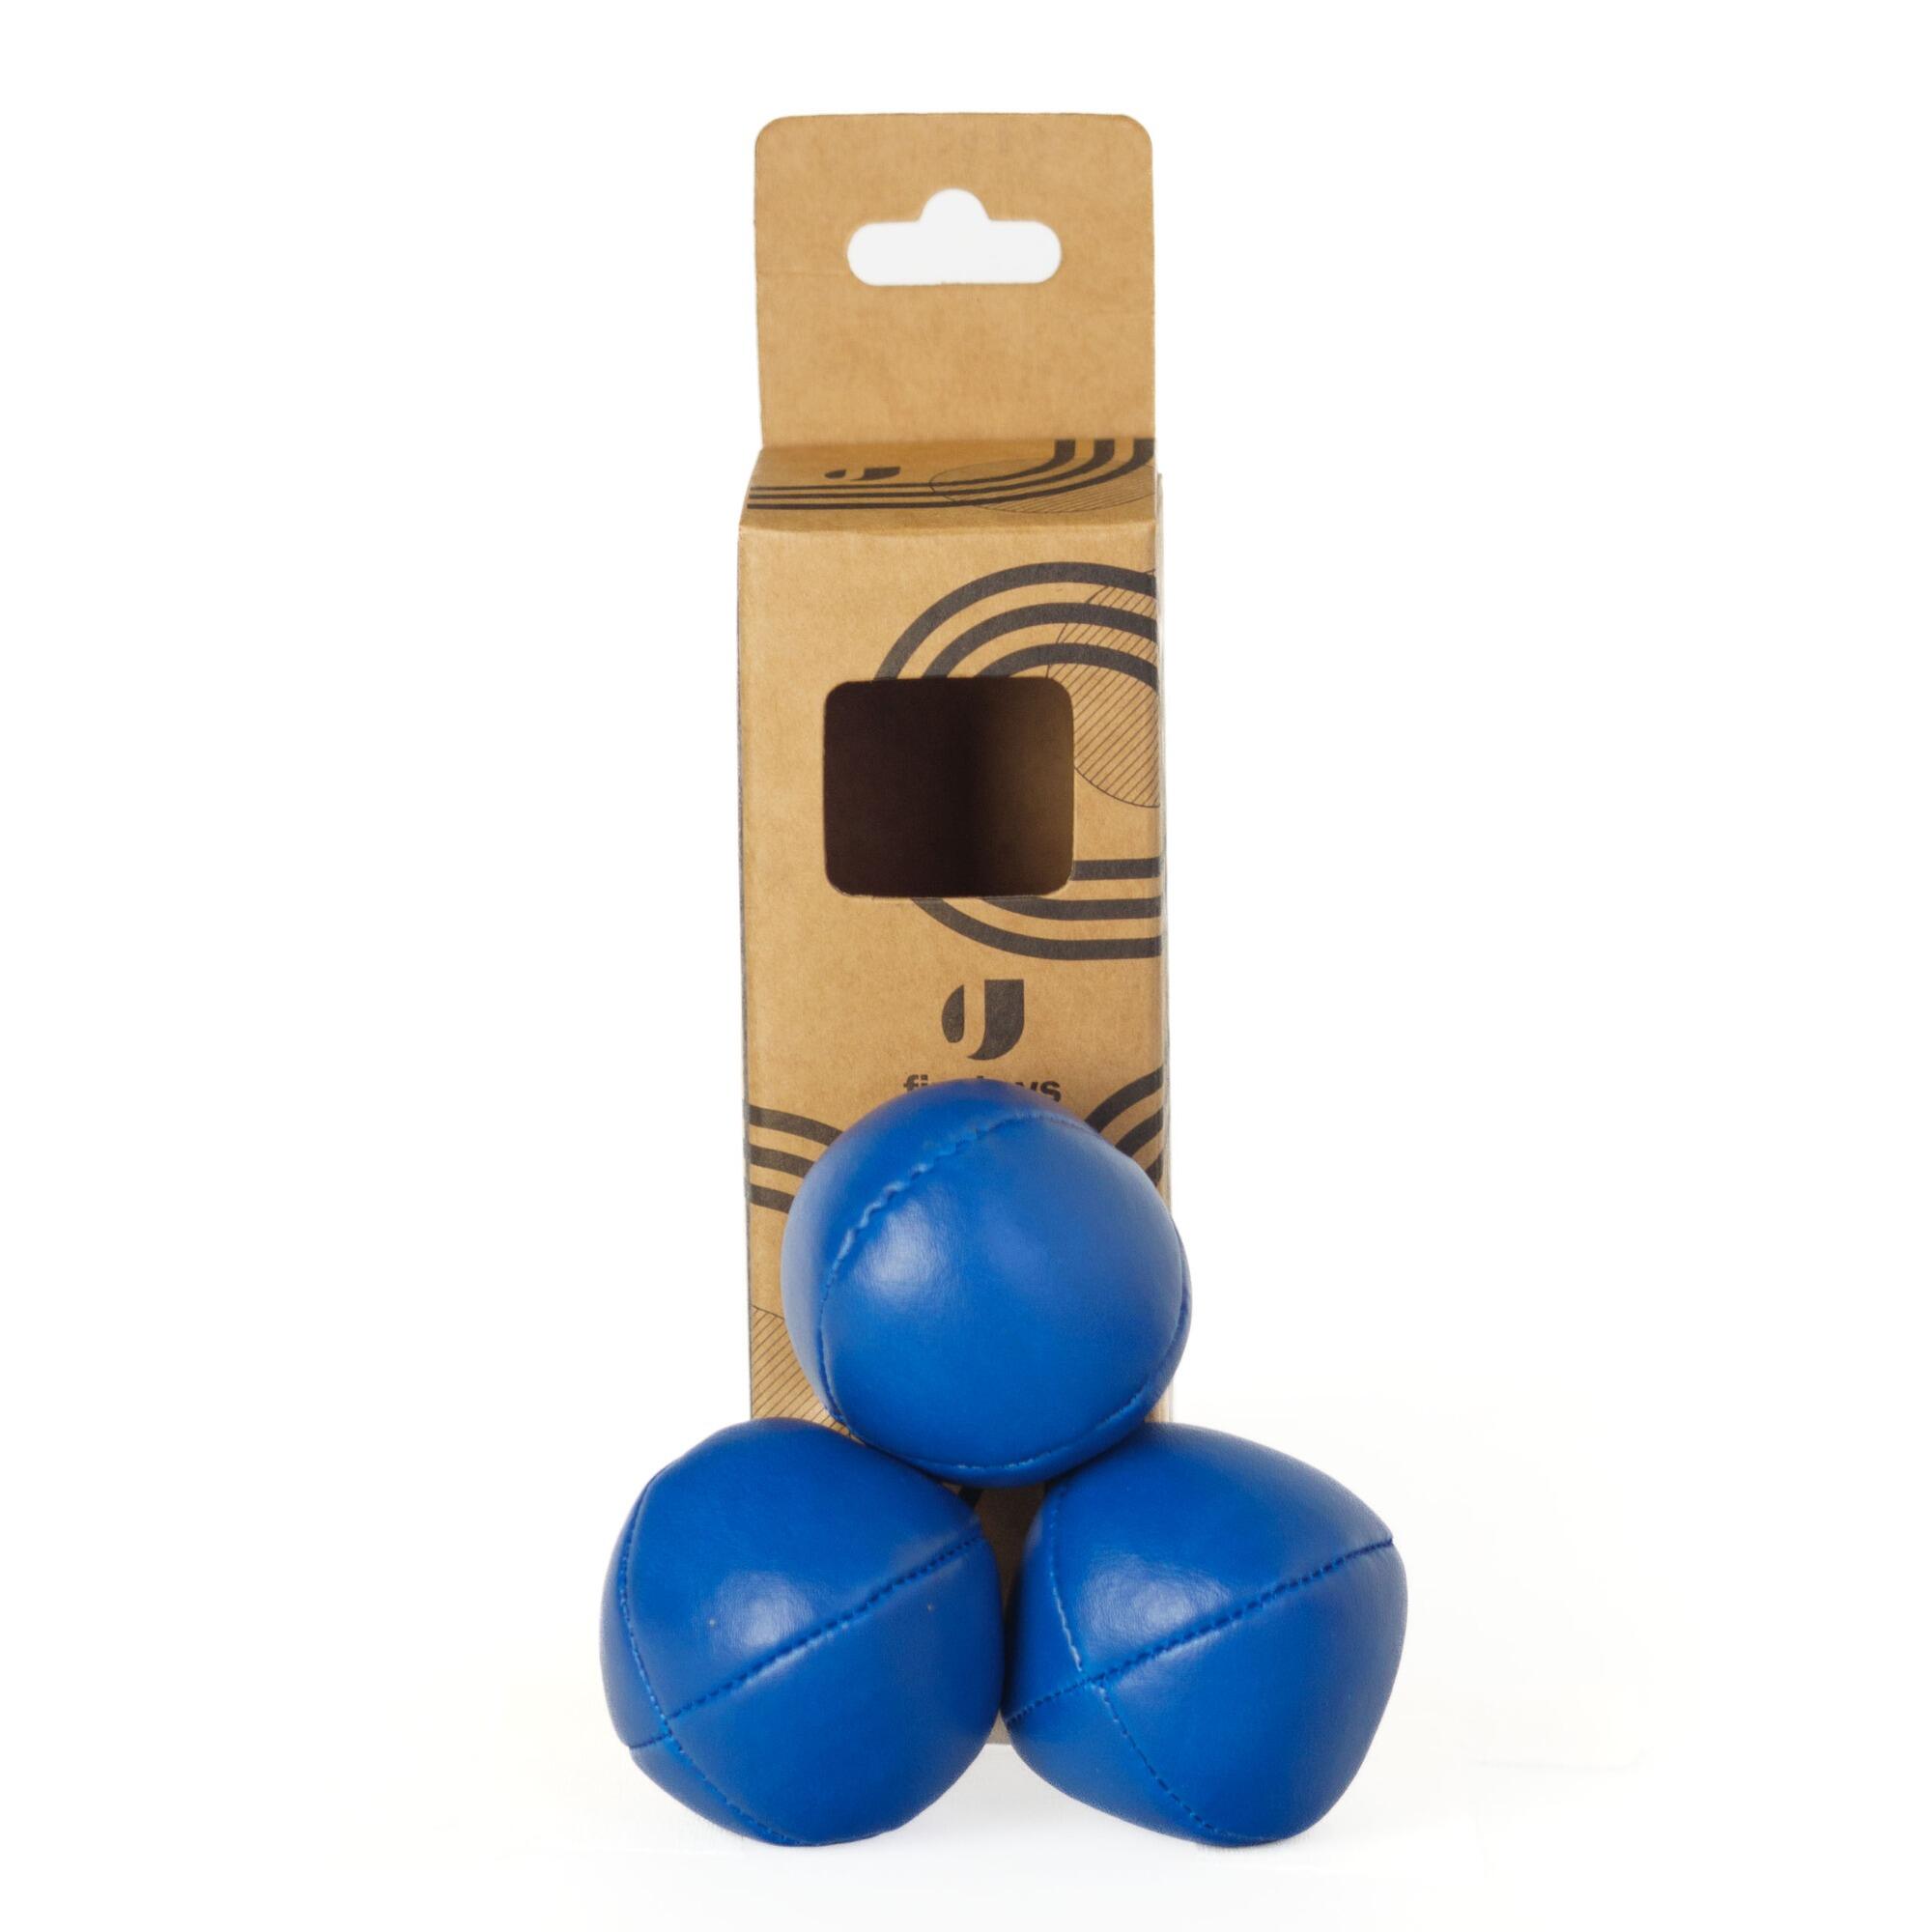 FIRETOYS Firetoys Juggling - 70g Thud - Set of 3x Juggling Balls